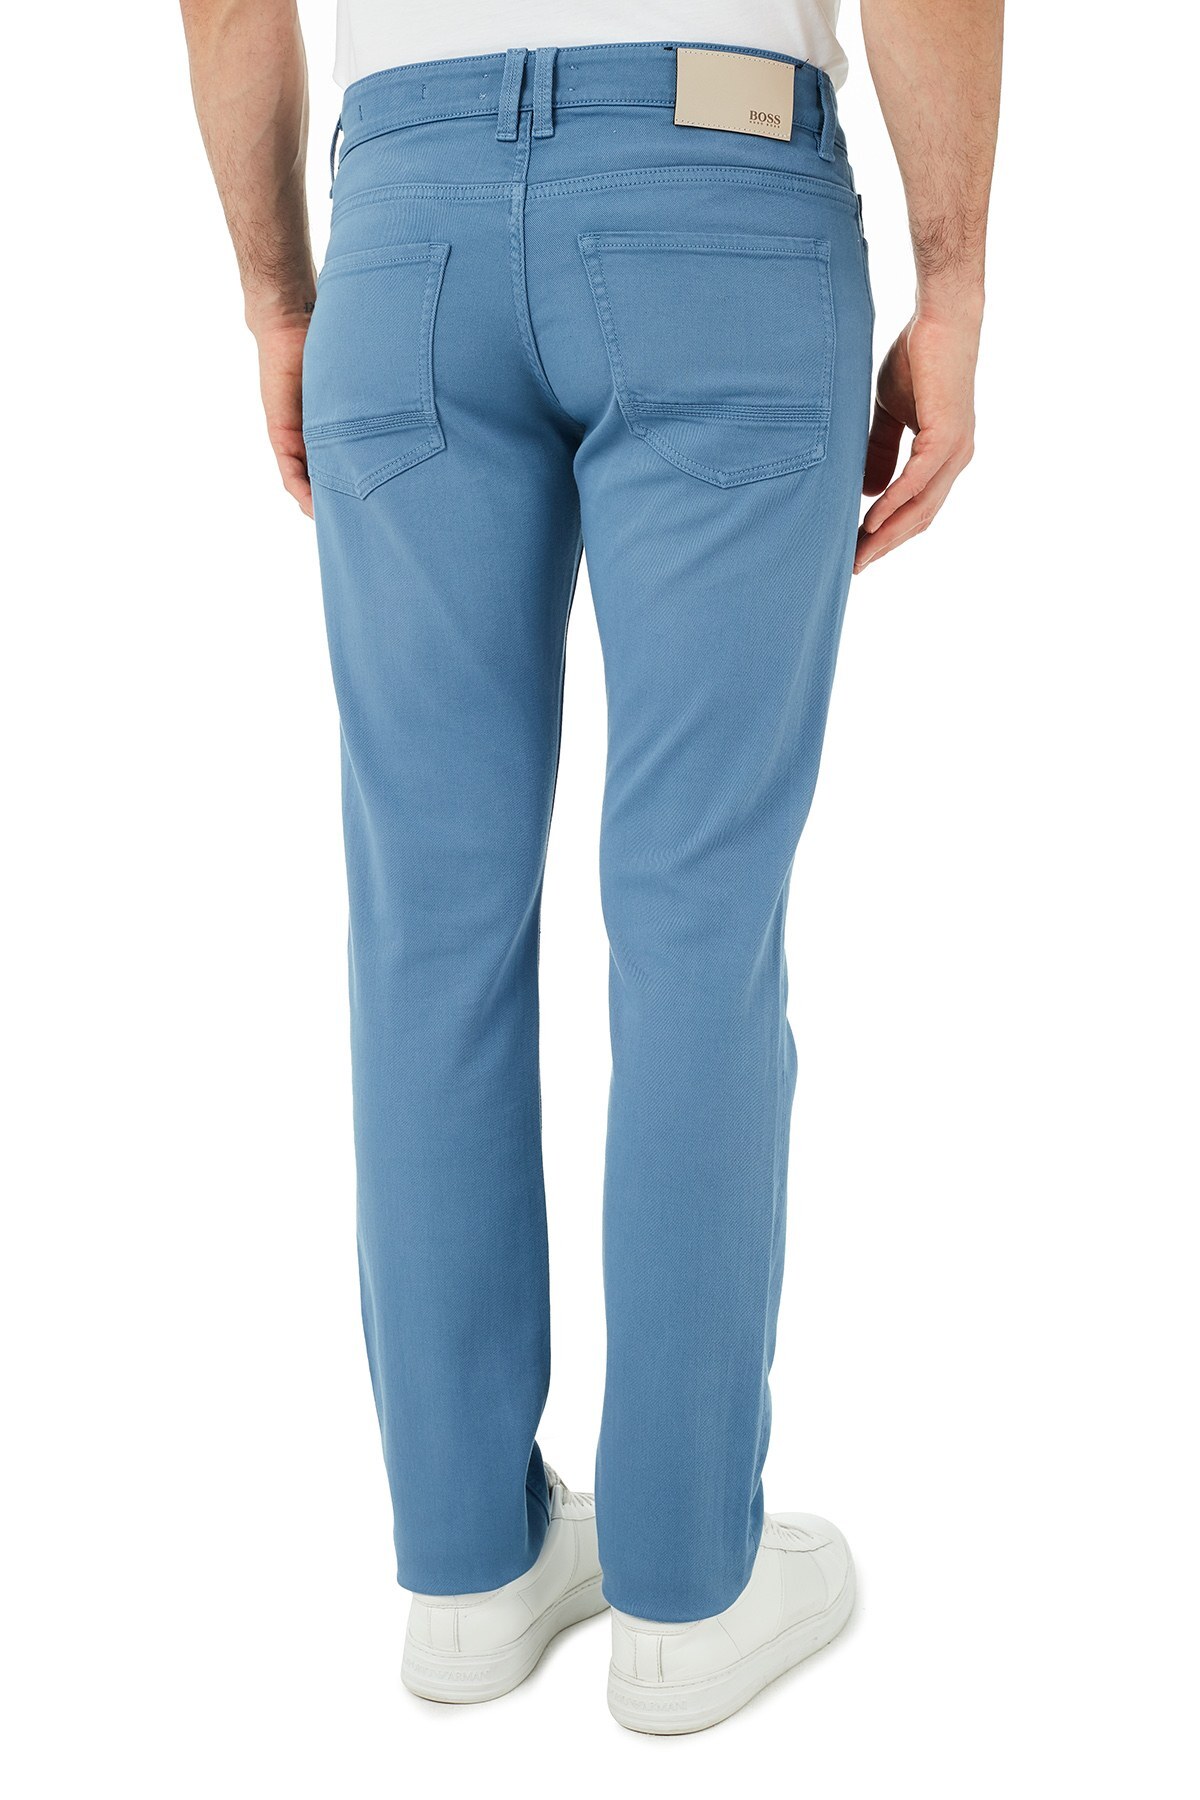 Hugo Boss Pamuklu Slim Fit Jeans Erkek Kot Pantolon 50449671 489 MAVİ